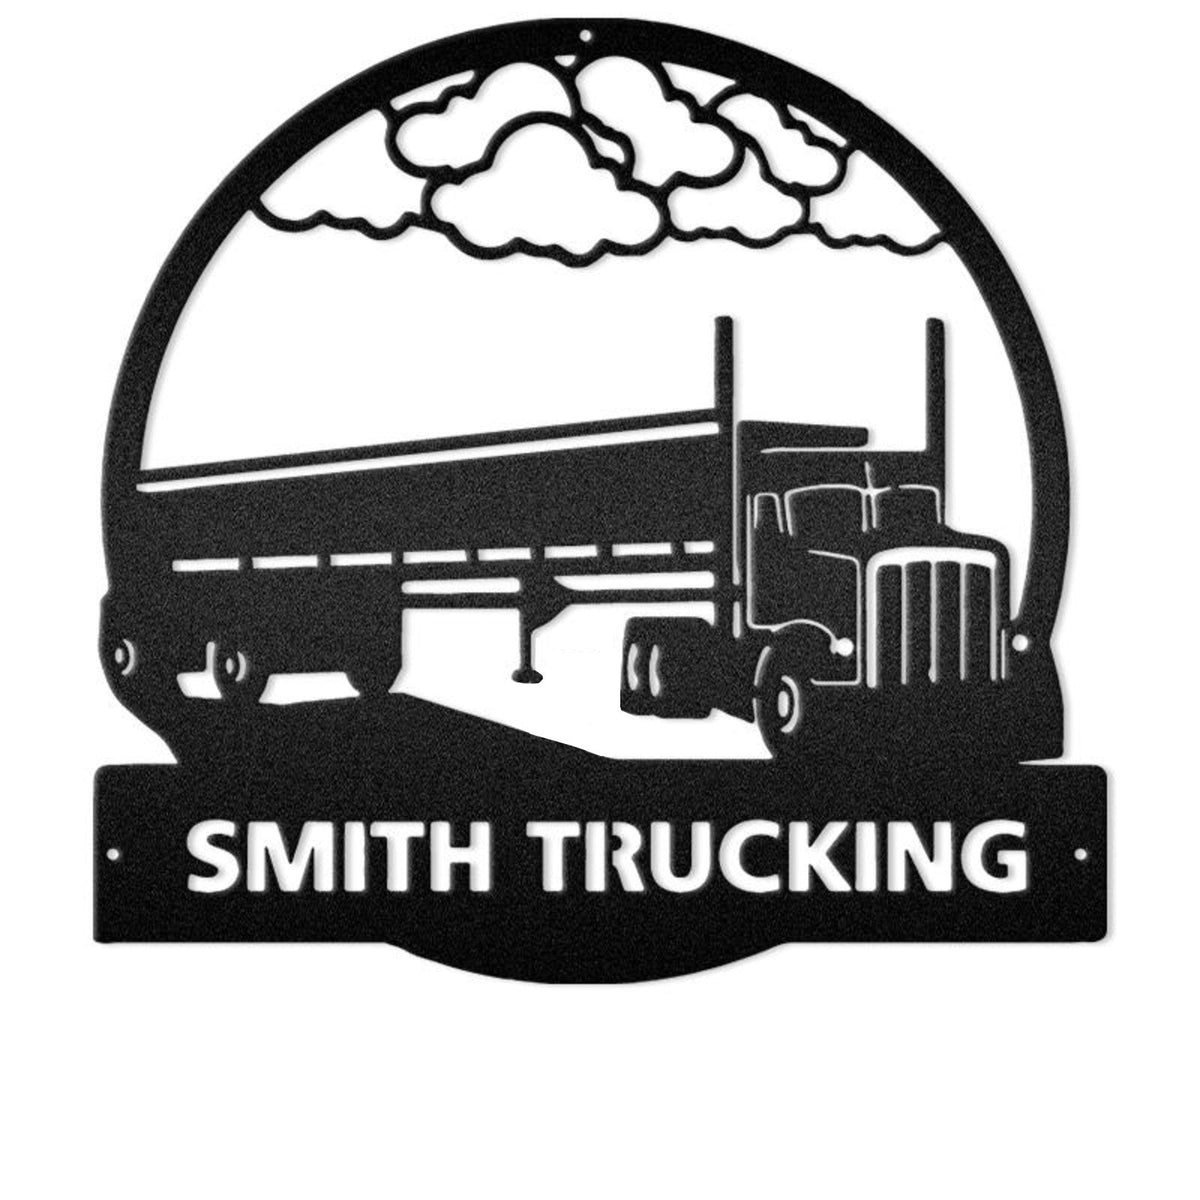 Big Rig Semi-trailer Truck Vehicle Monogram